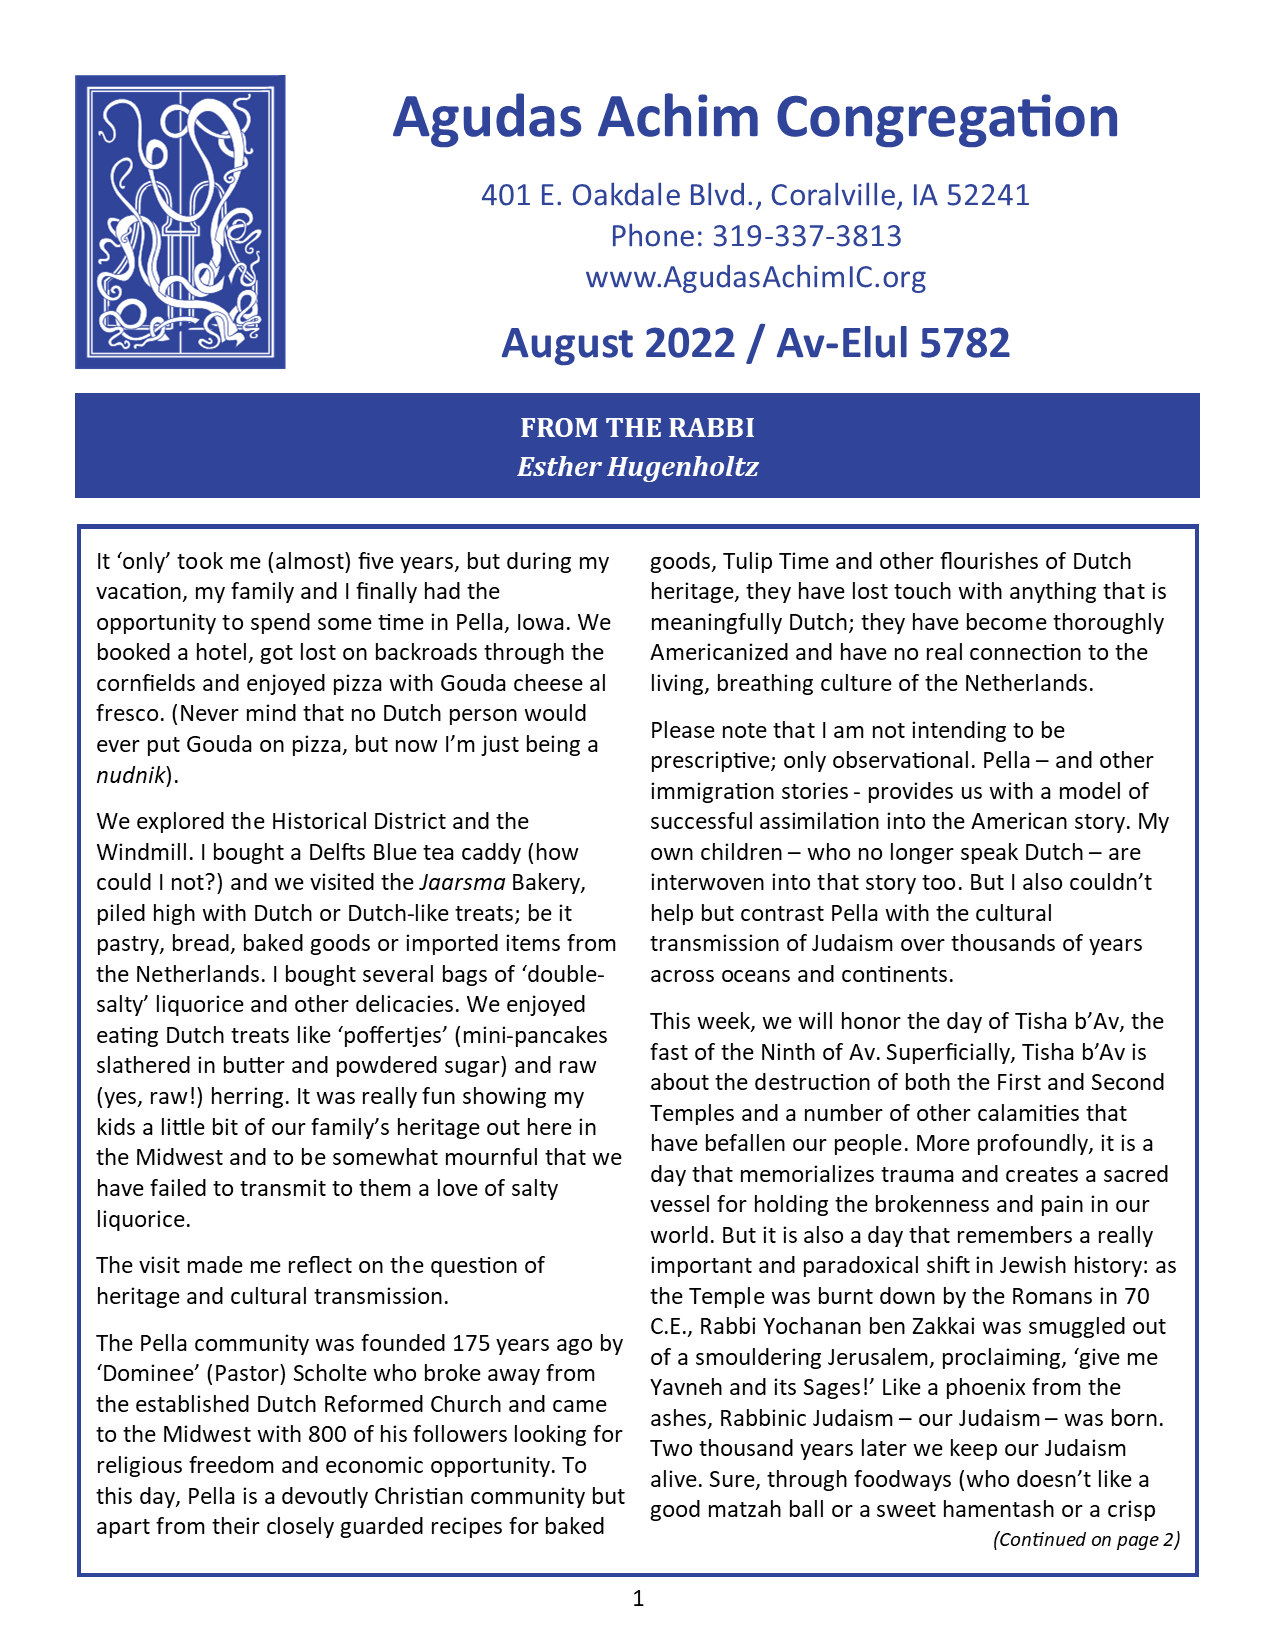 August 2022 Bulletin